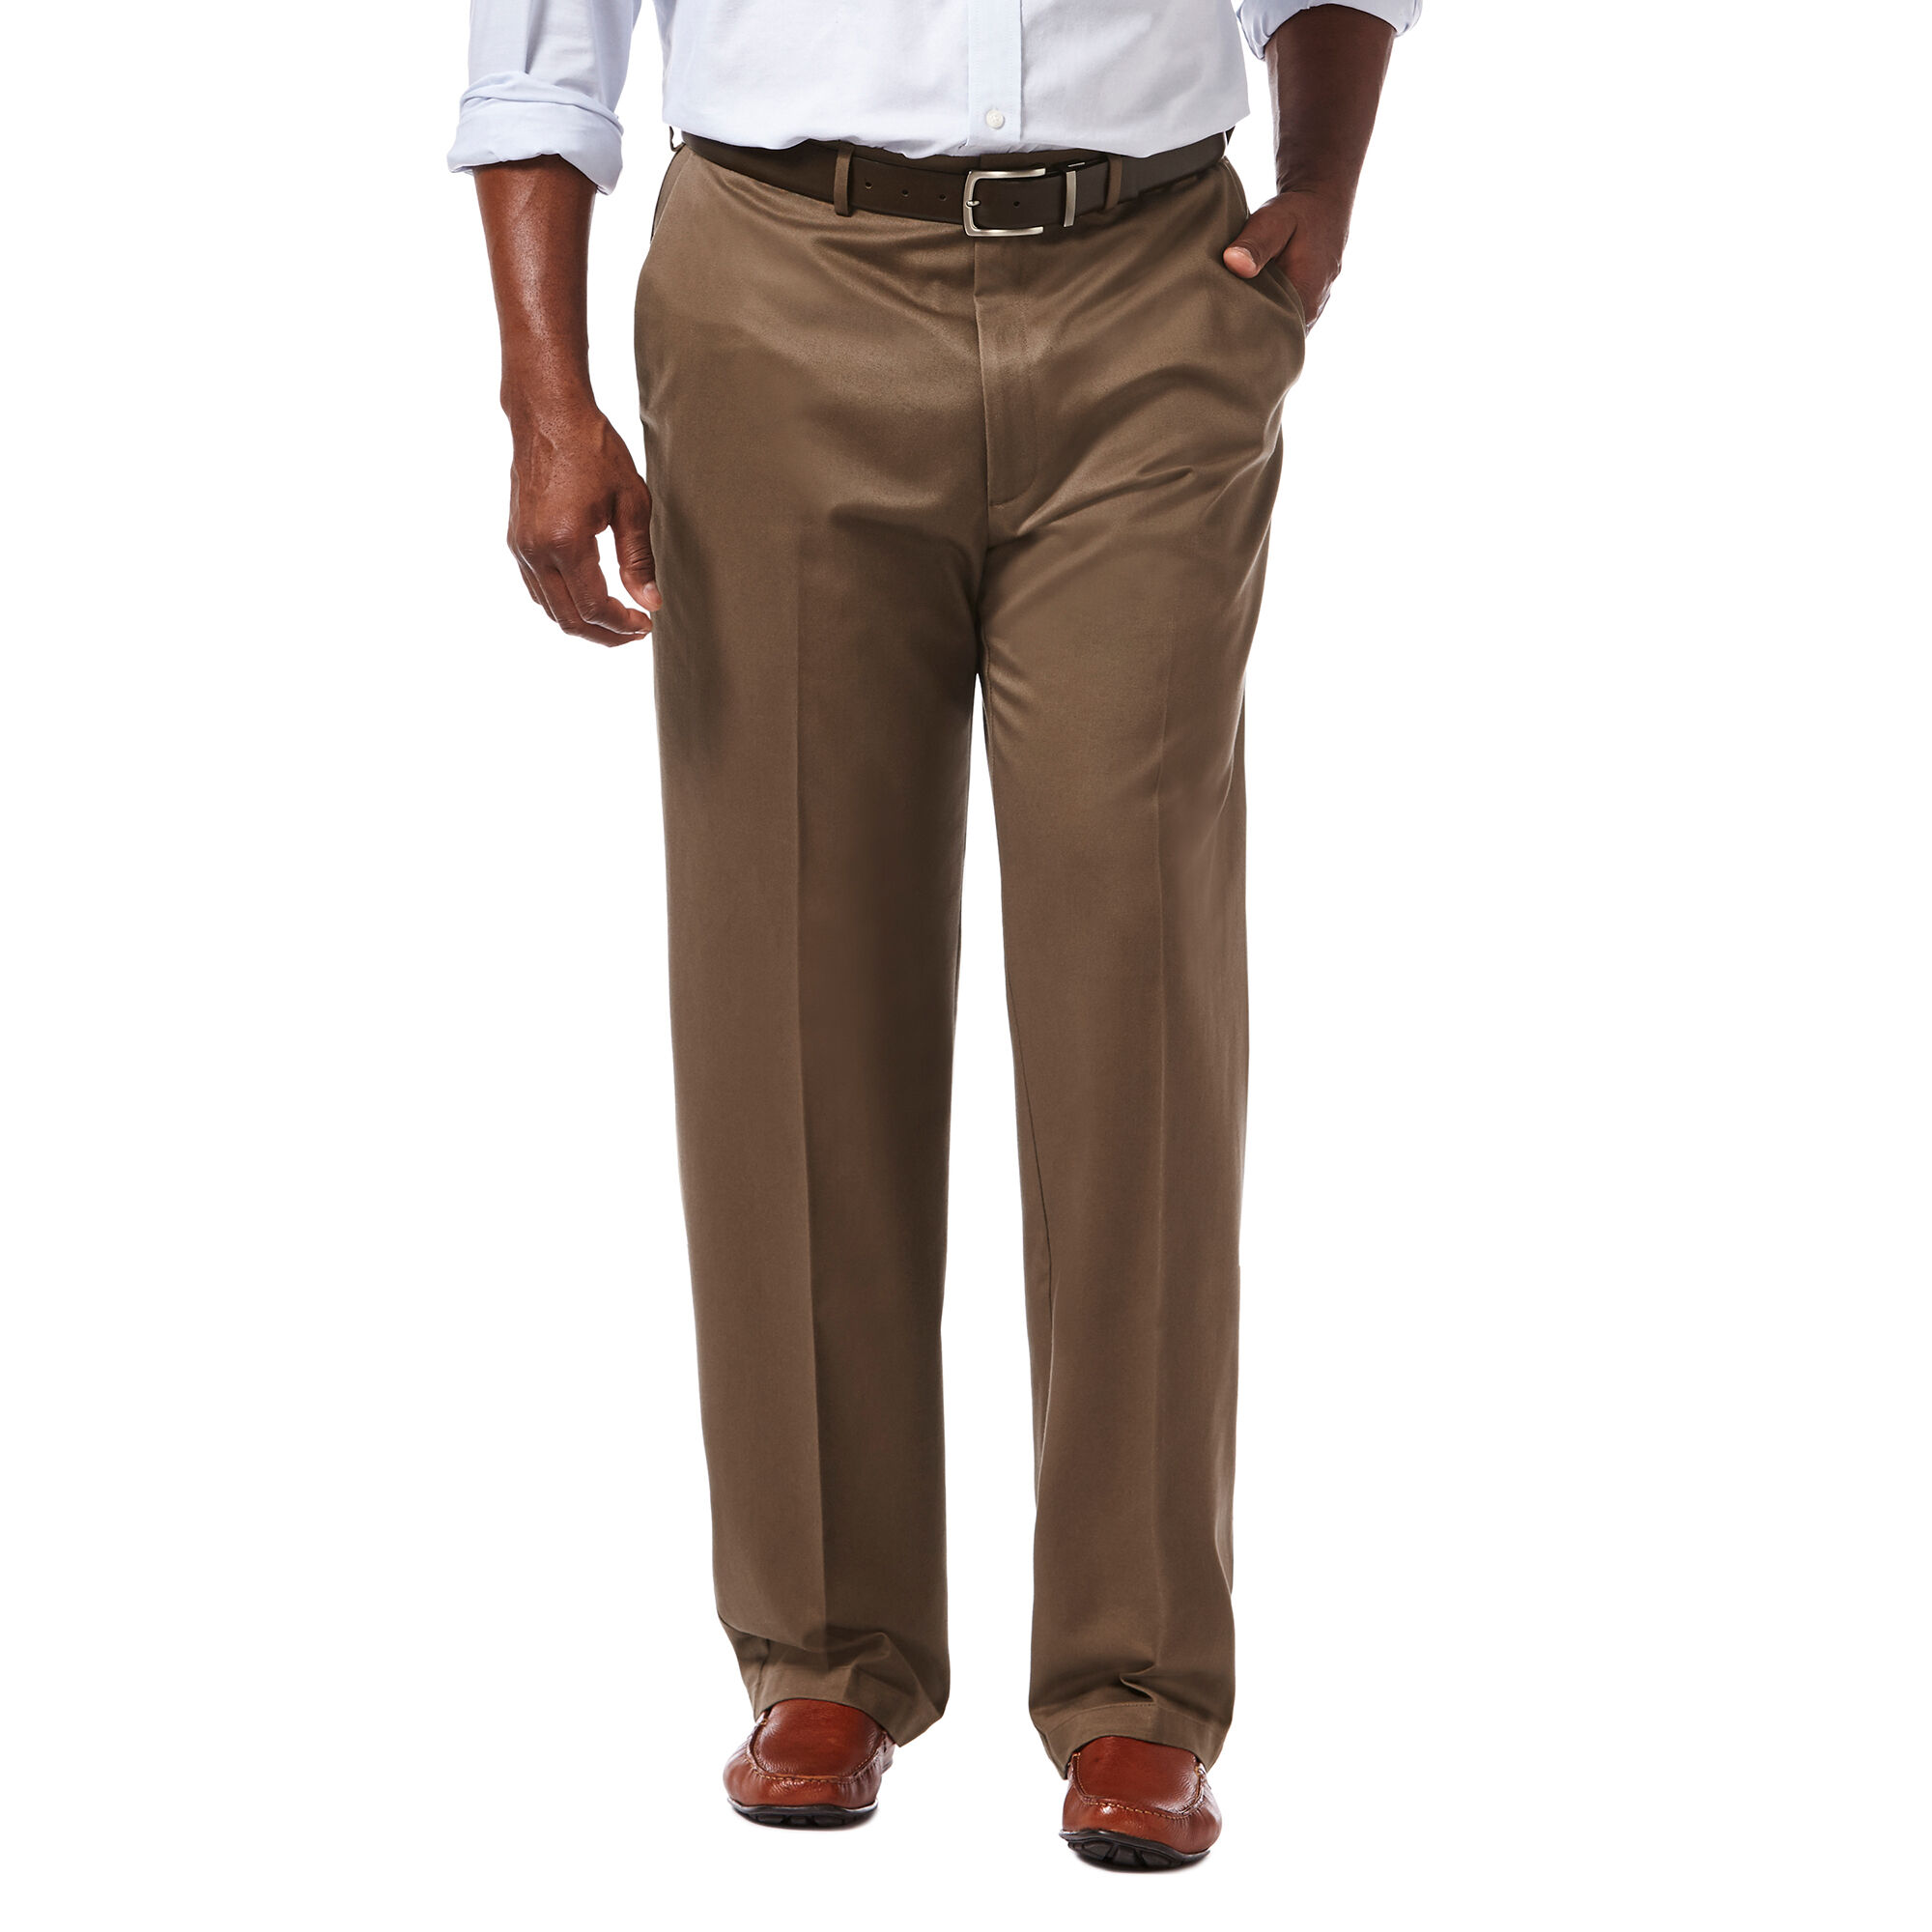 mens elastic waist khaki pants